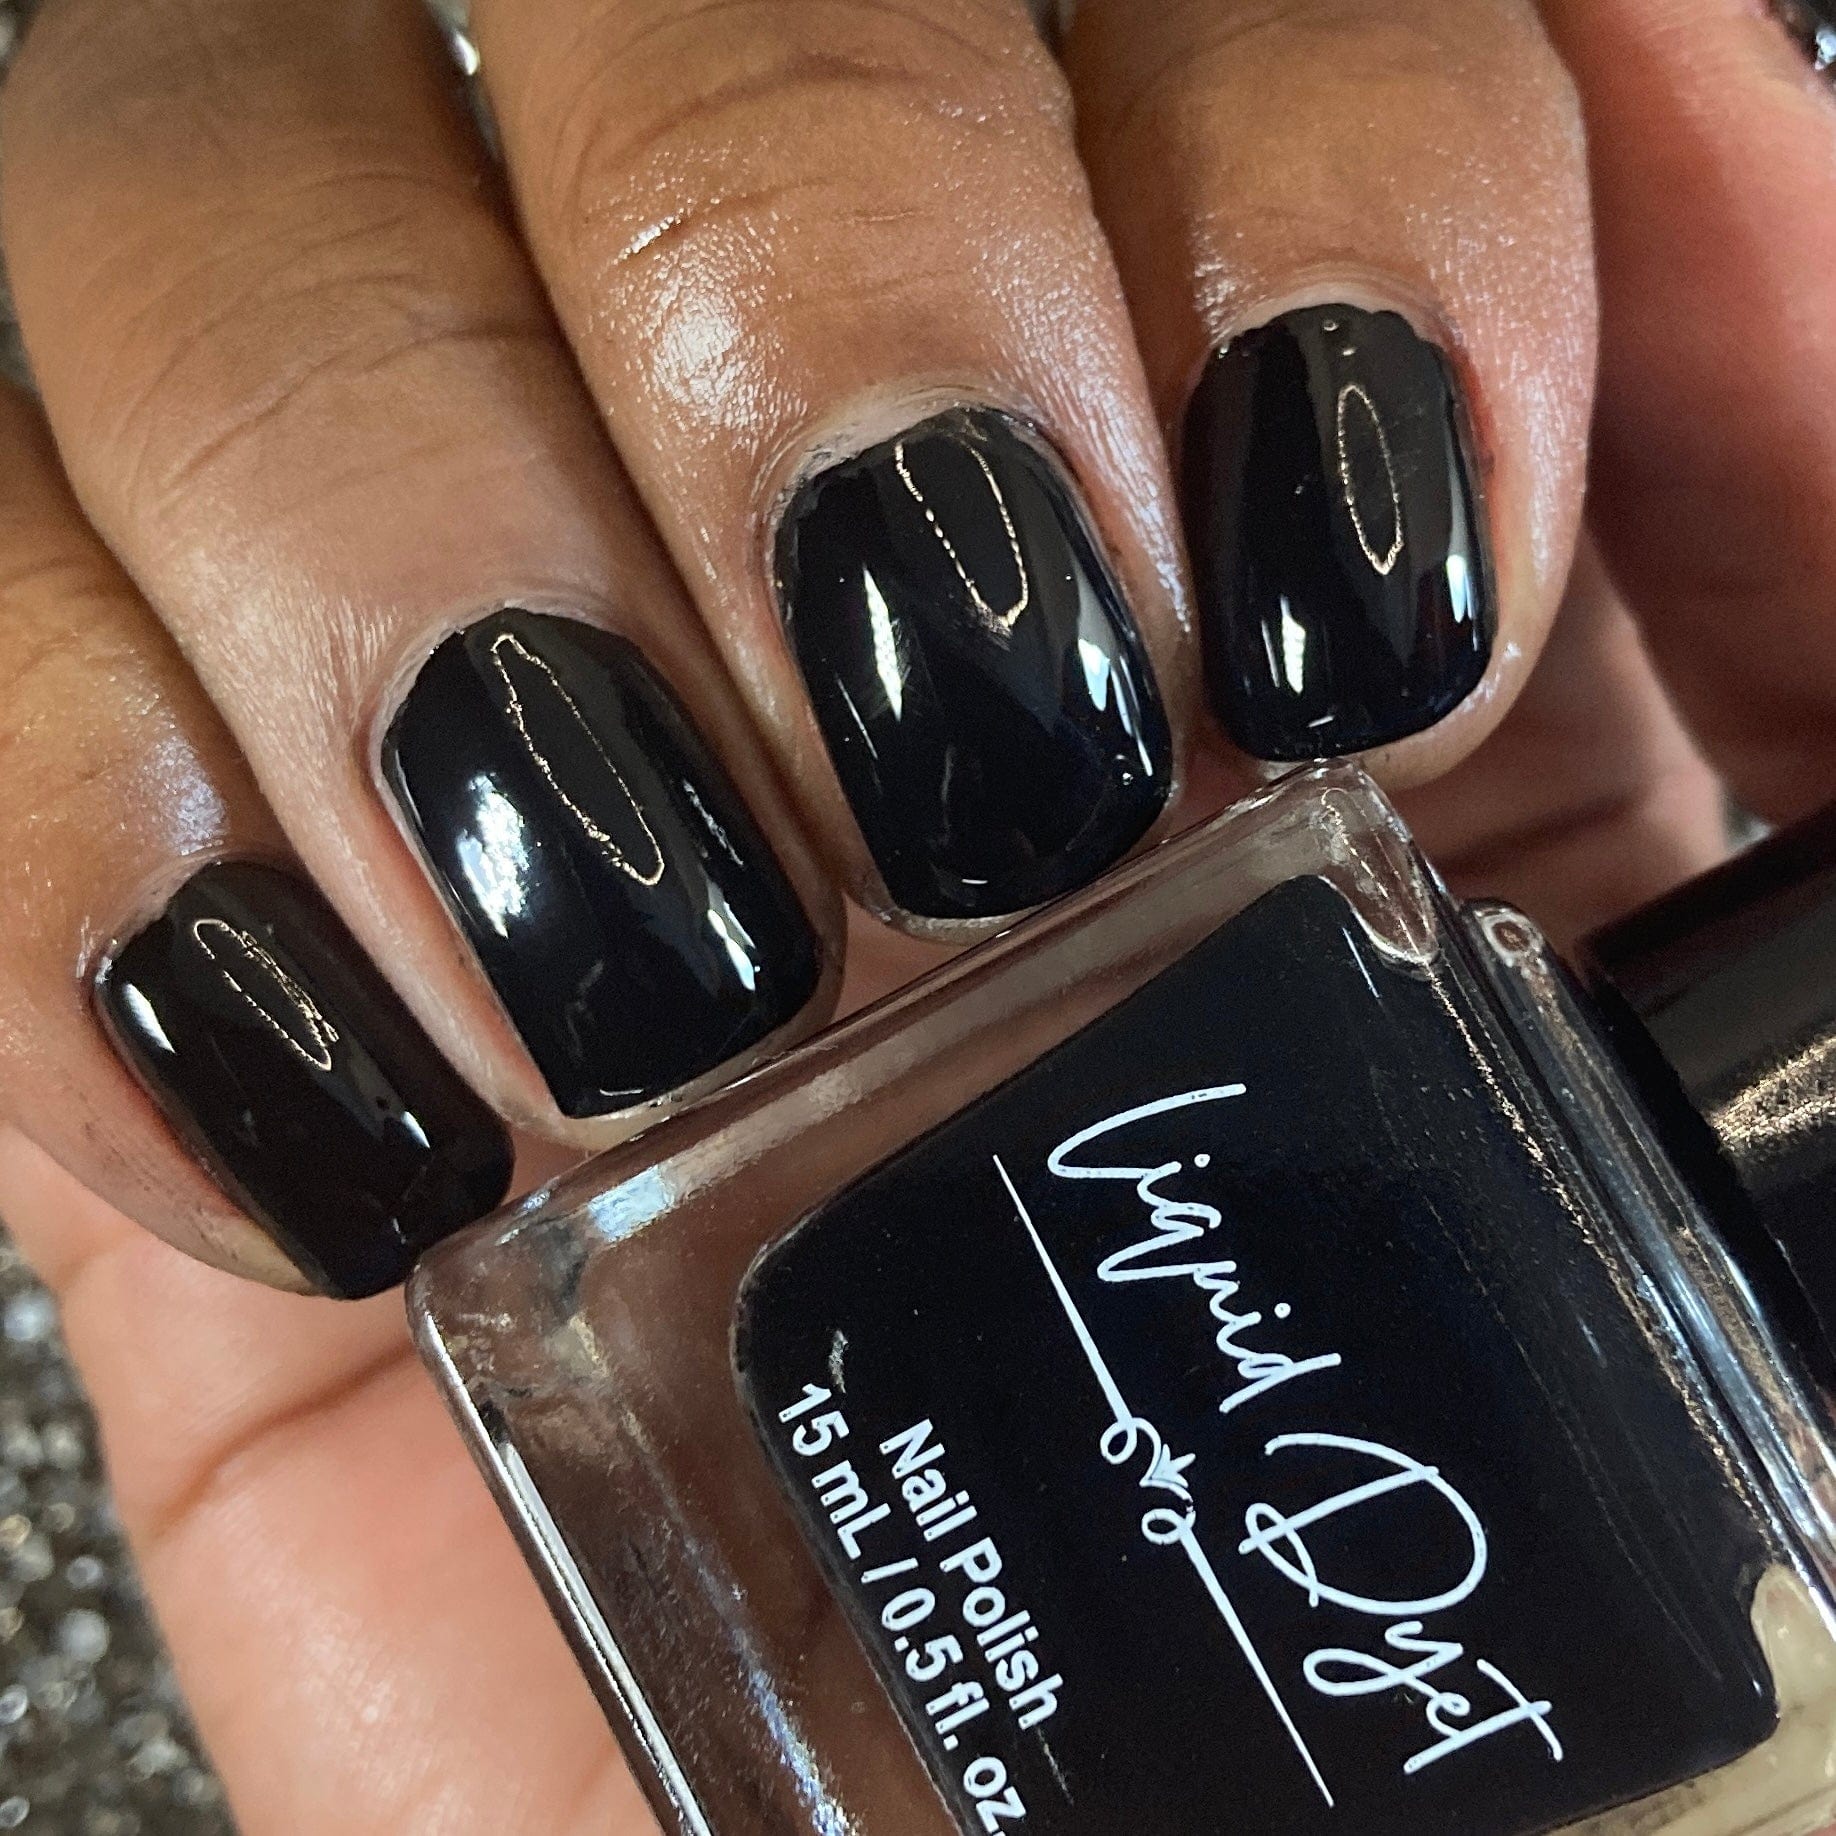 Picture of fingernails painted in a sleek black vegan nail polish